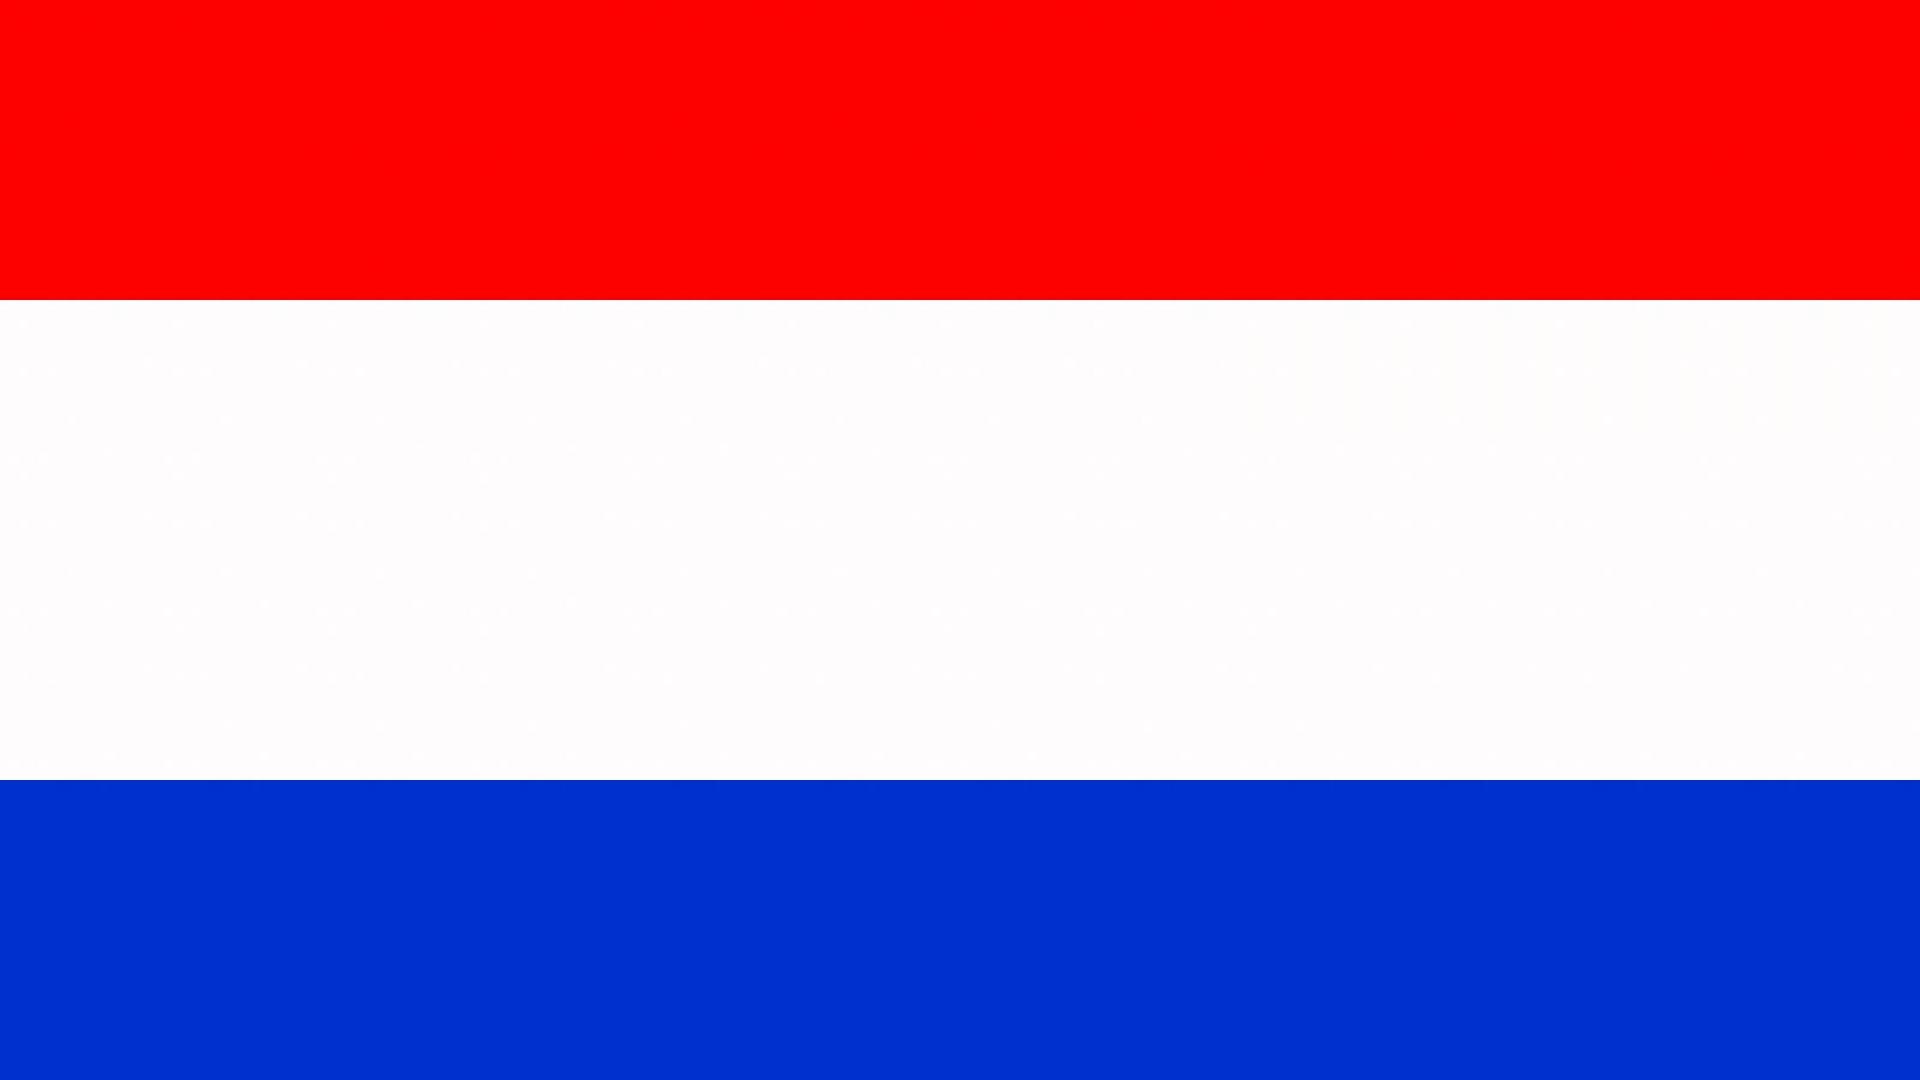 Netherlands Flag - Wallpaper, High Definition, High Quality, Widescreen